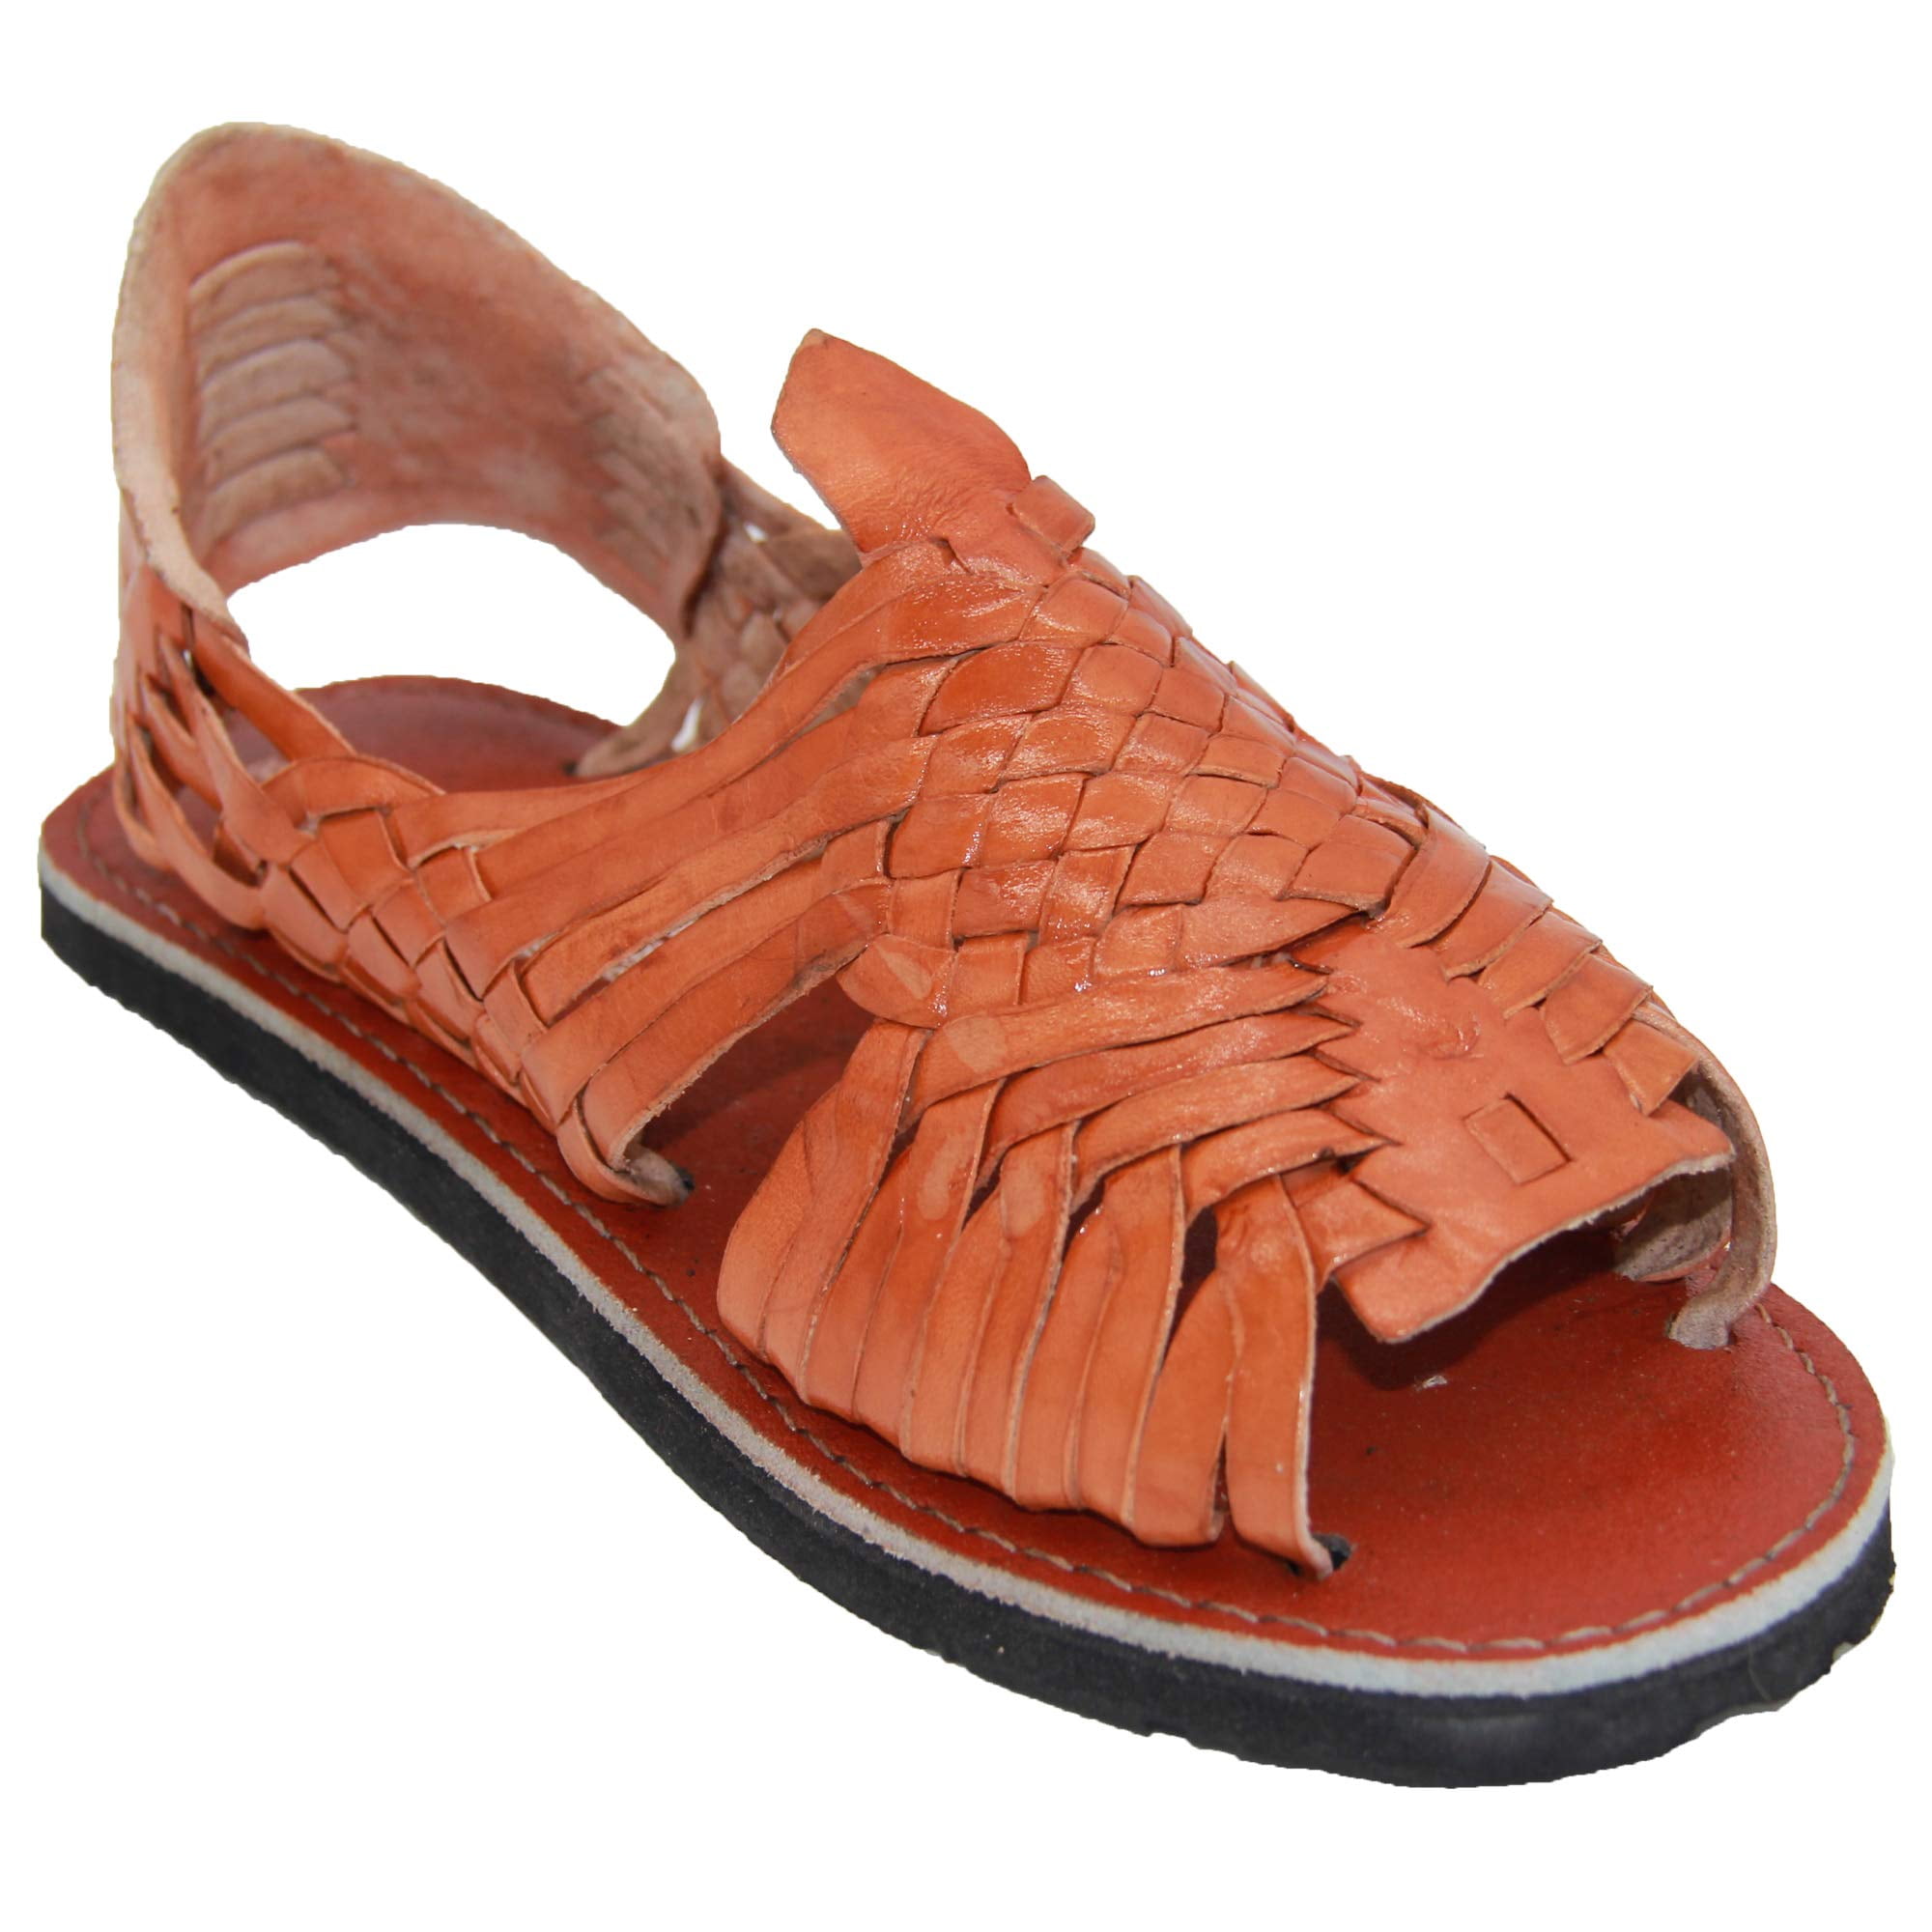 Buy Mens huarache sandal dominoes Camel Online India  Ubuy